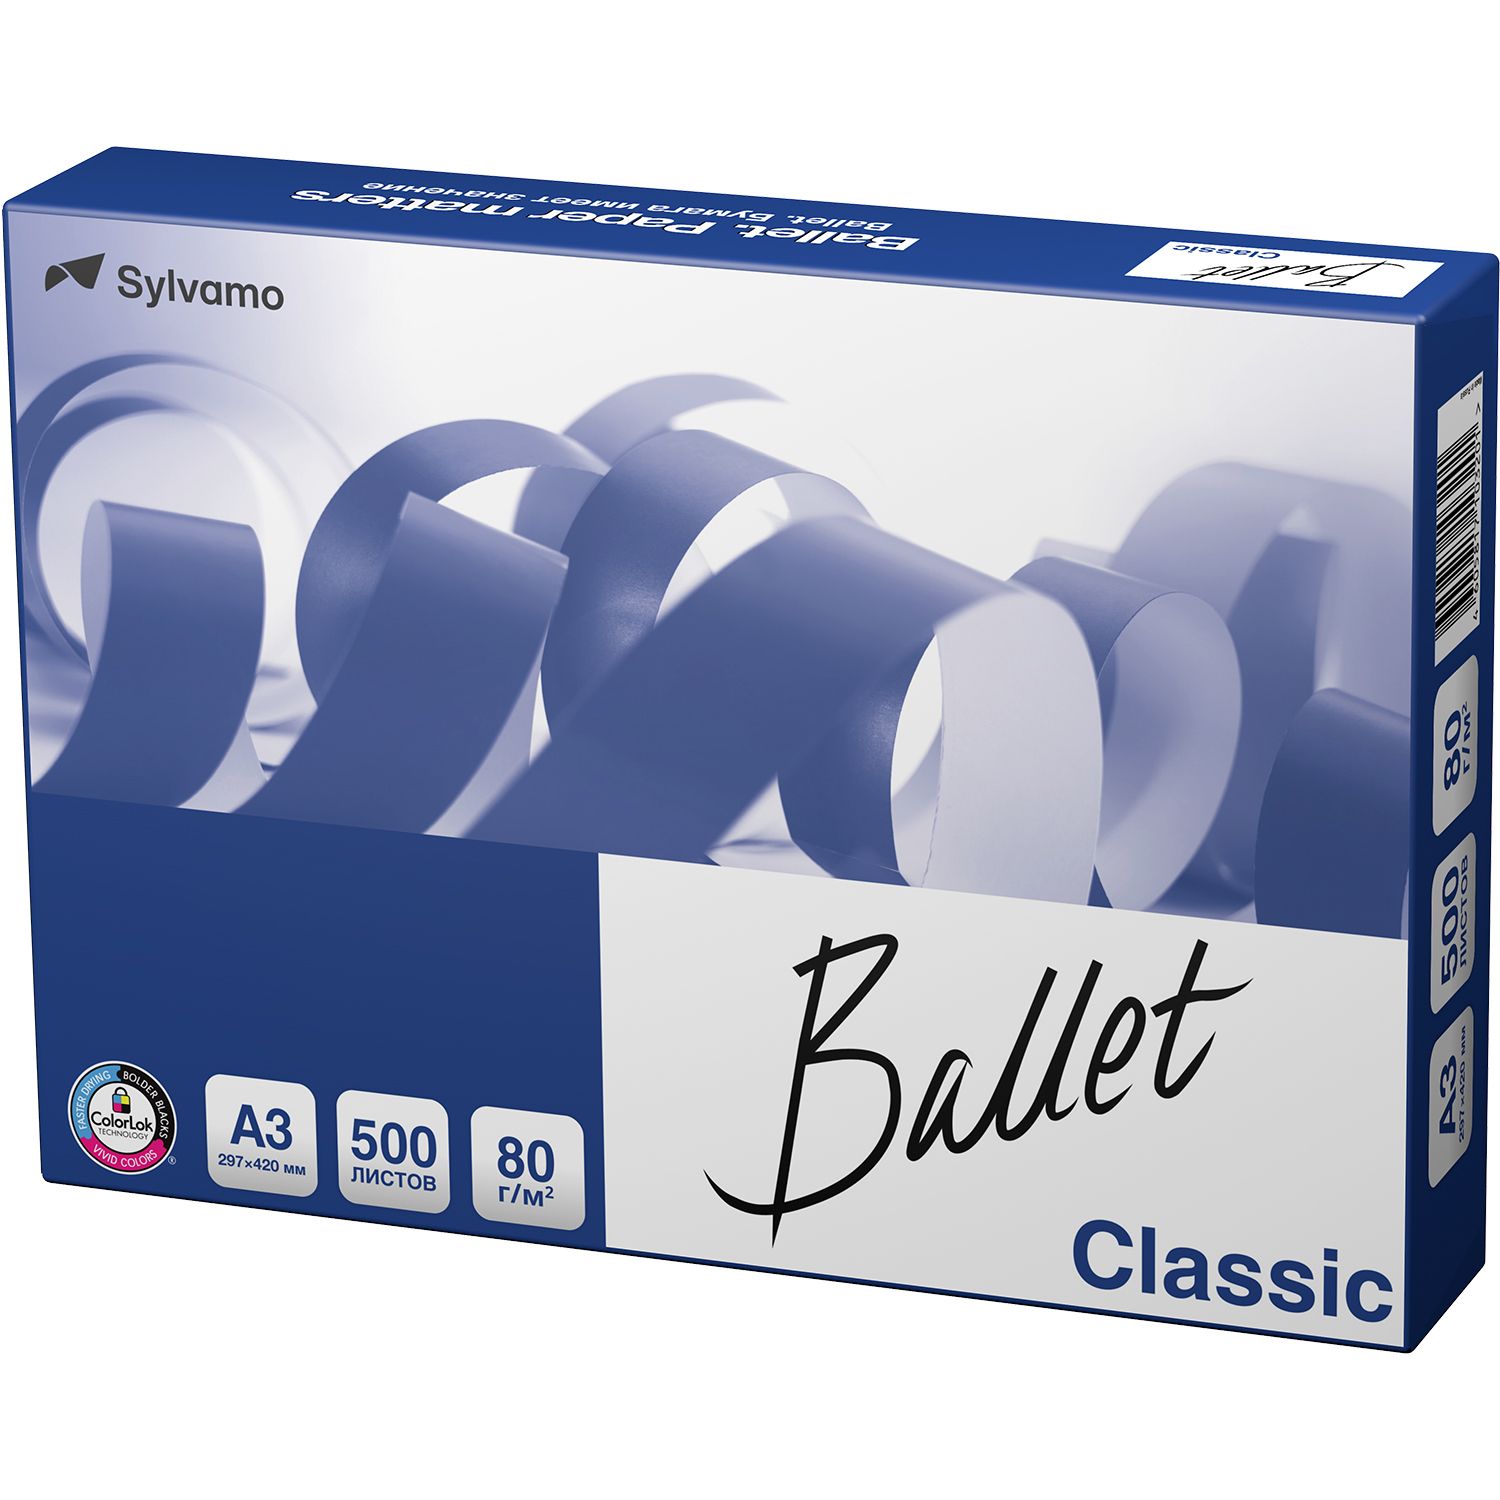  BALLET CLASSIC 500 . 80 /2 3   